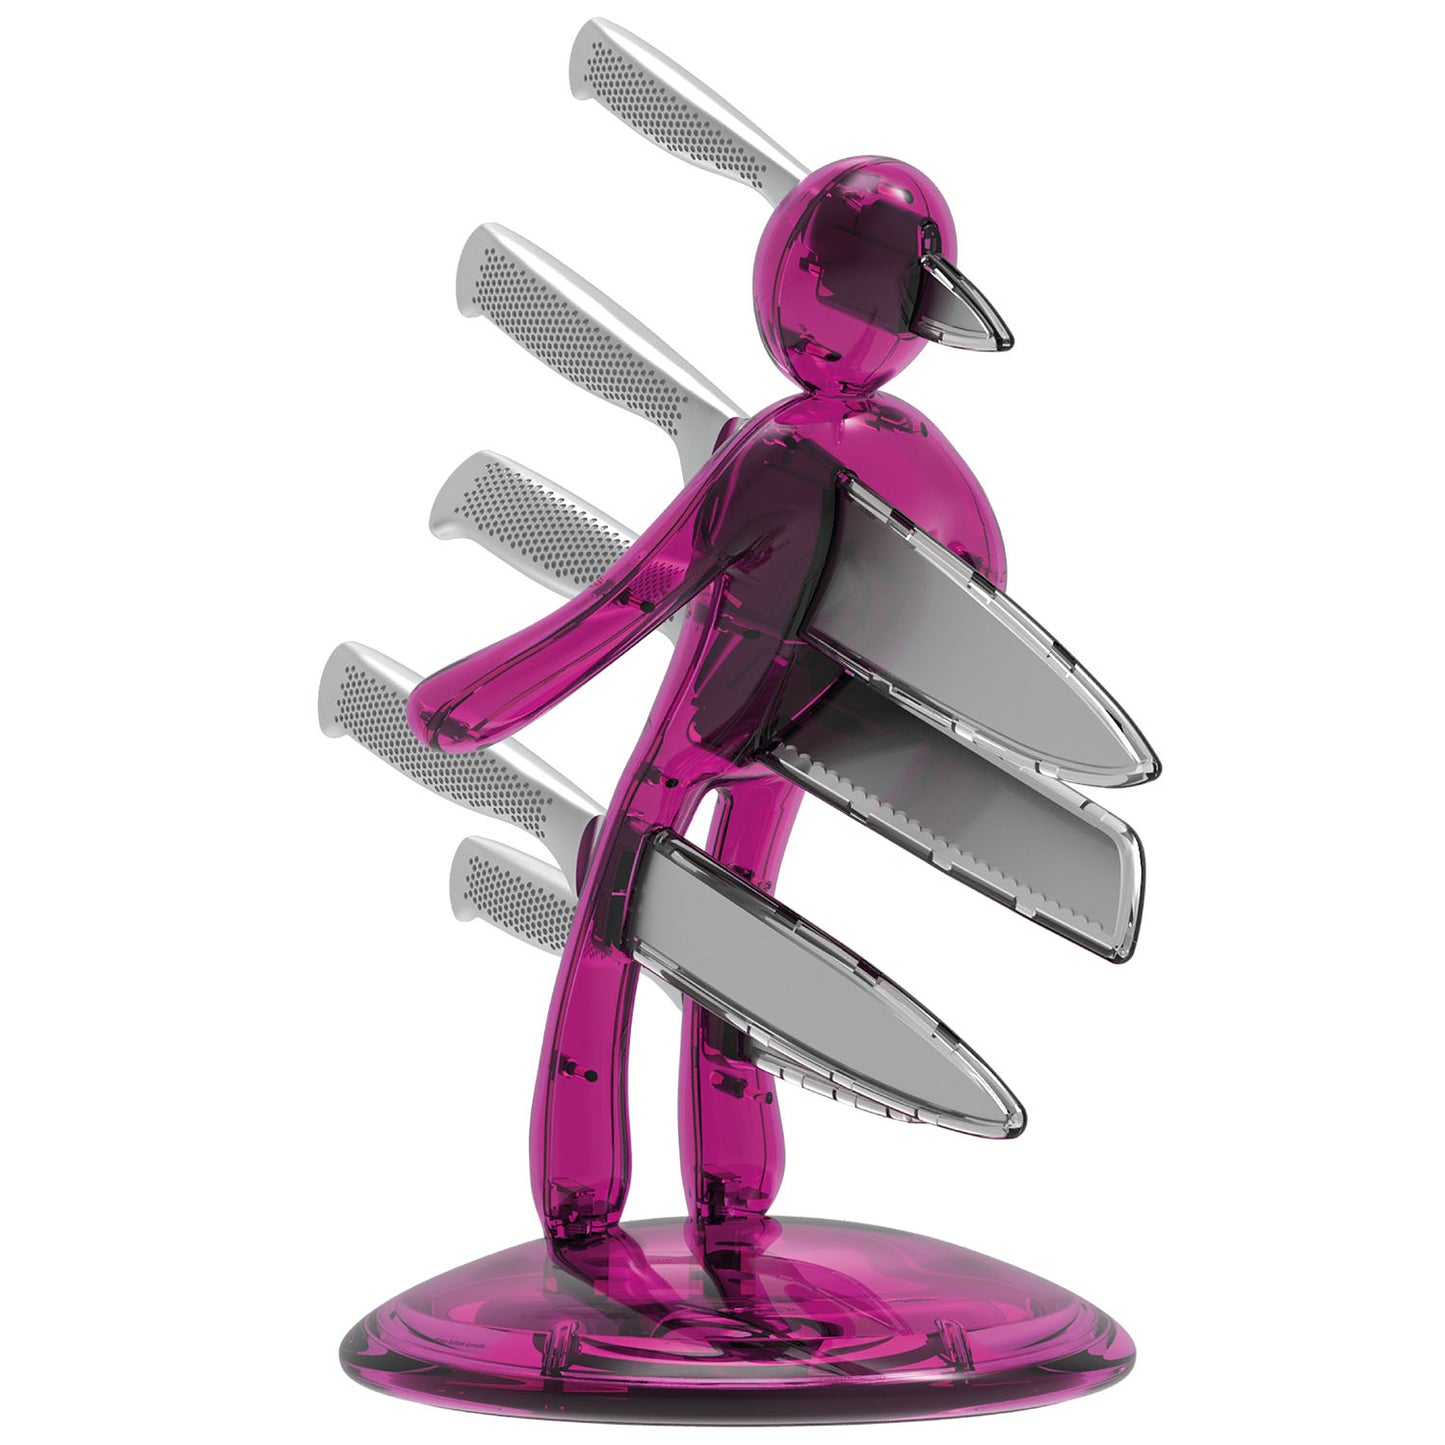 Voodoo/TheEx "Classic Edition" Knife Set - Pink Translucent Plastic Holder